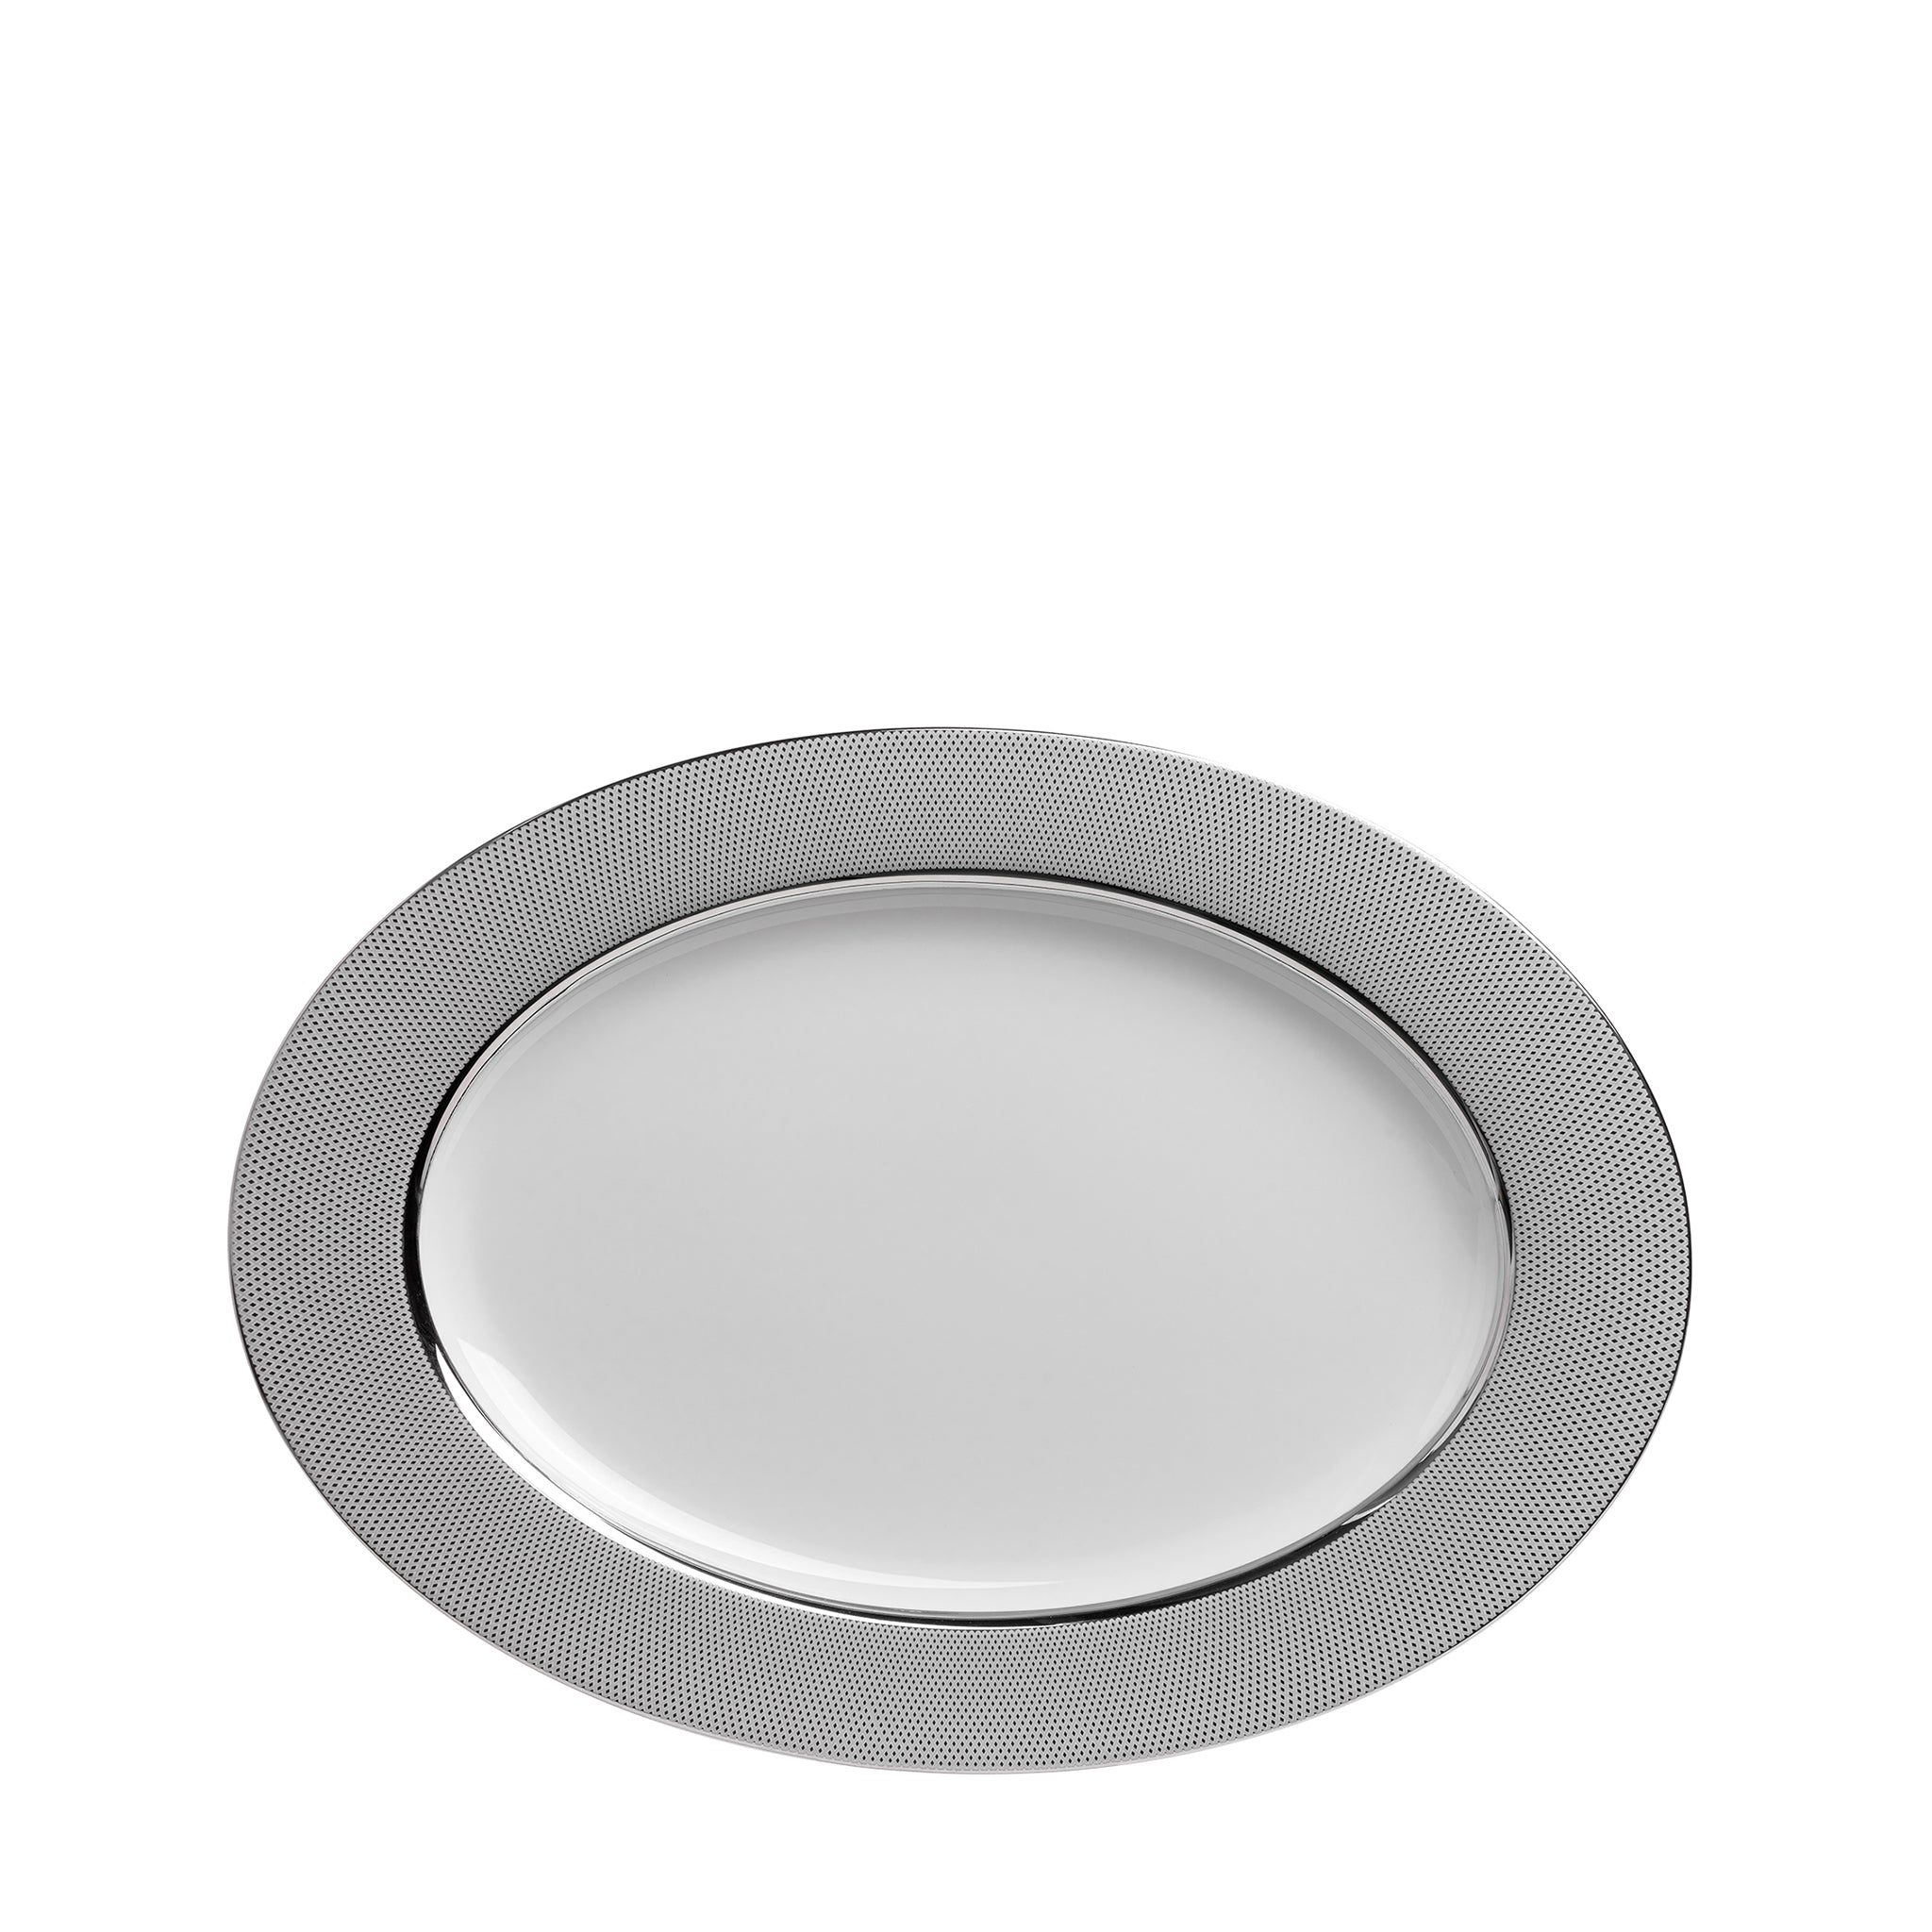 narumi platinum diamond 38cm oval platter serving platters 